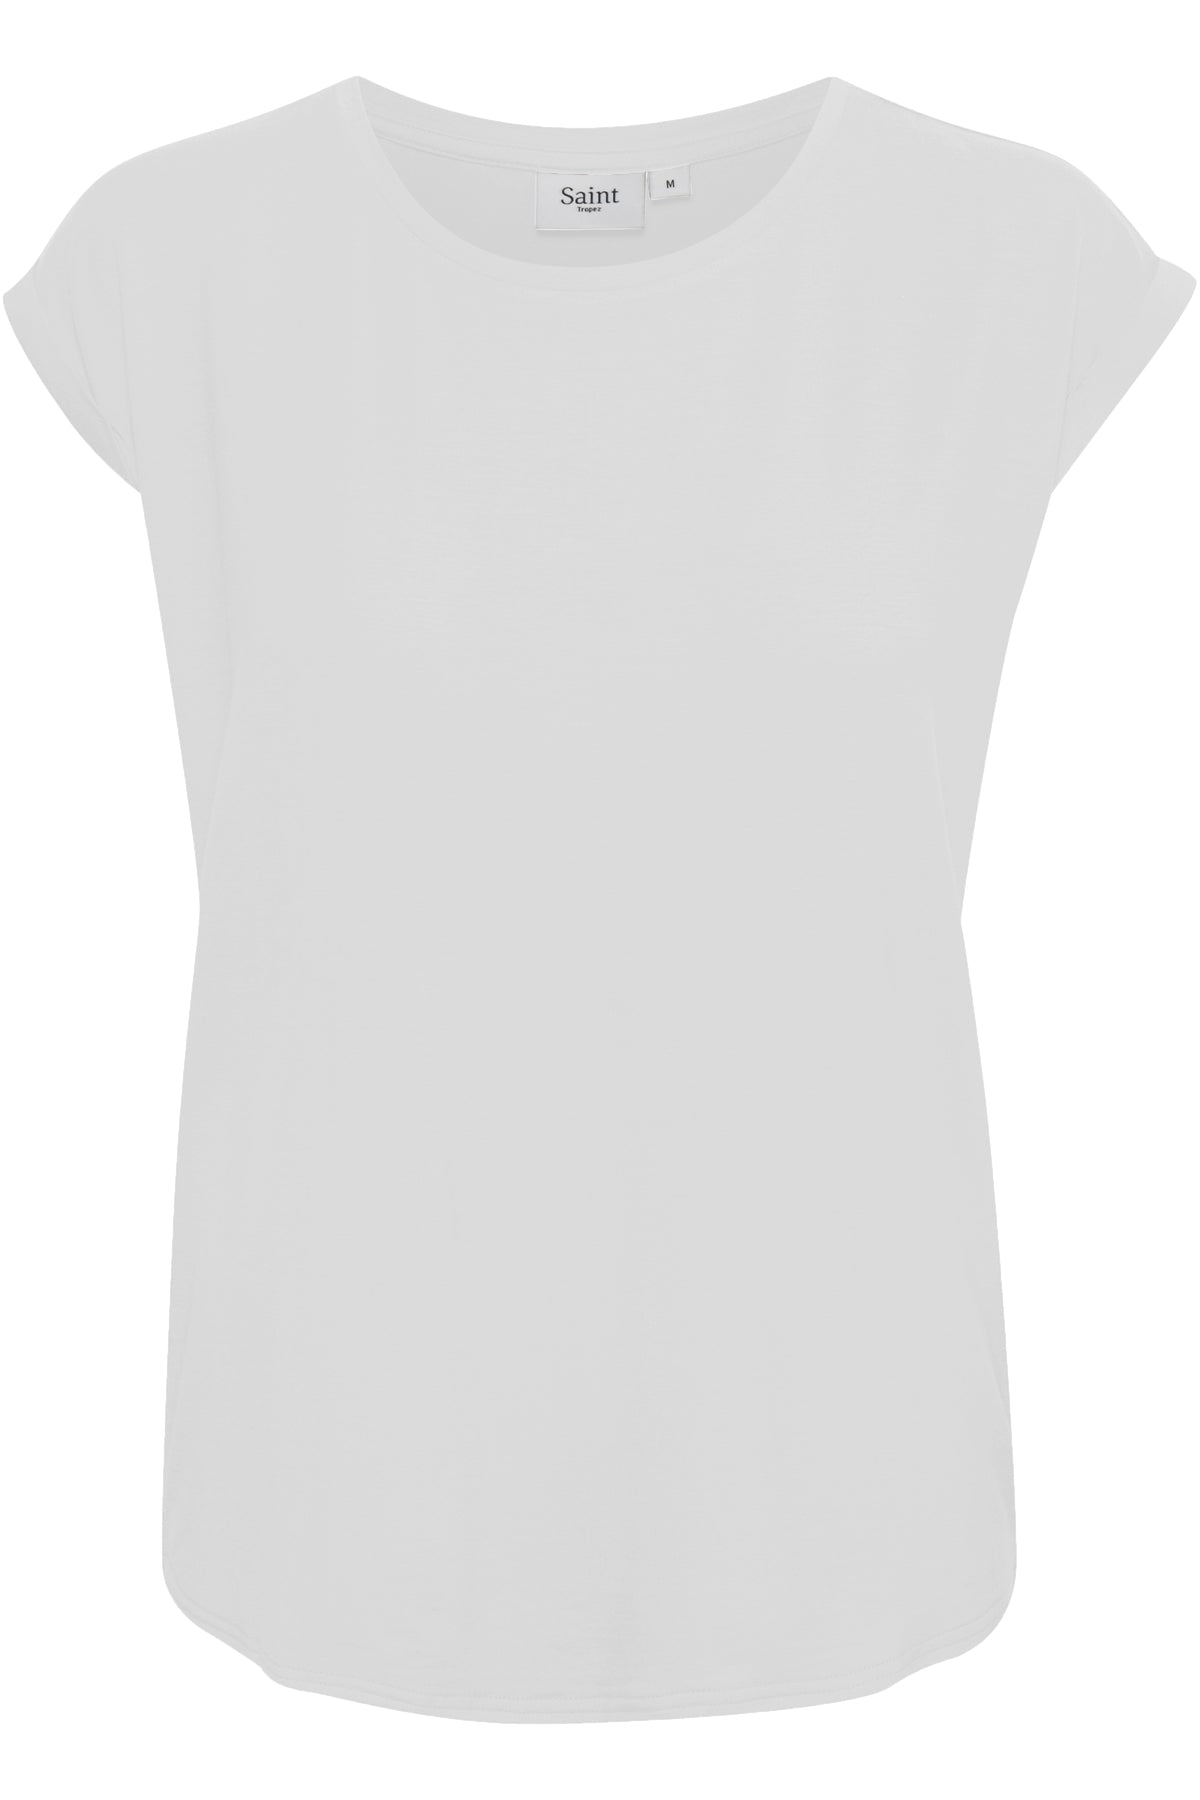 Adelia t-shirt in white